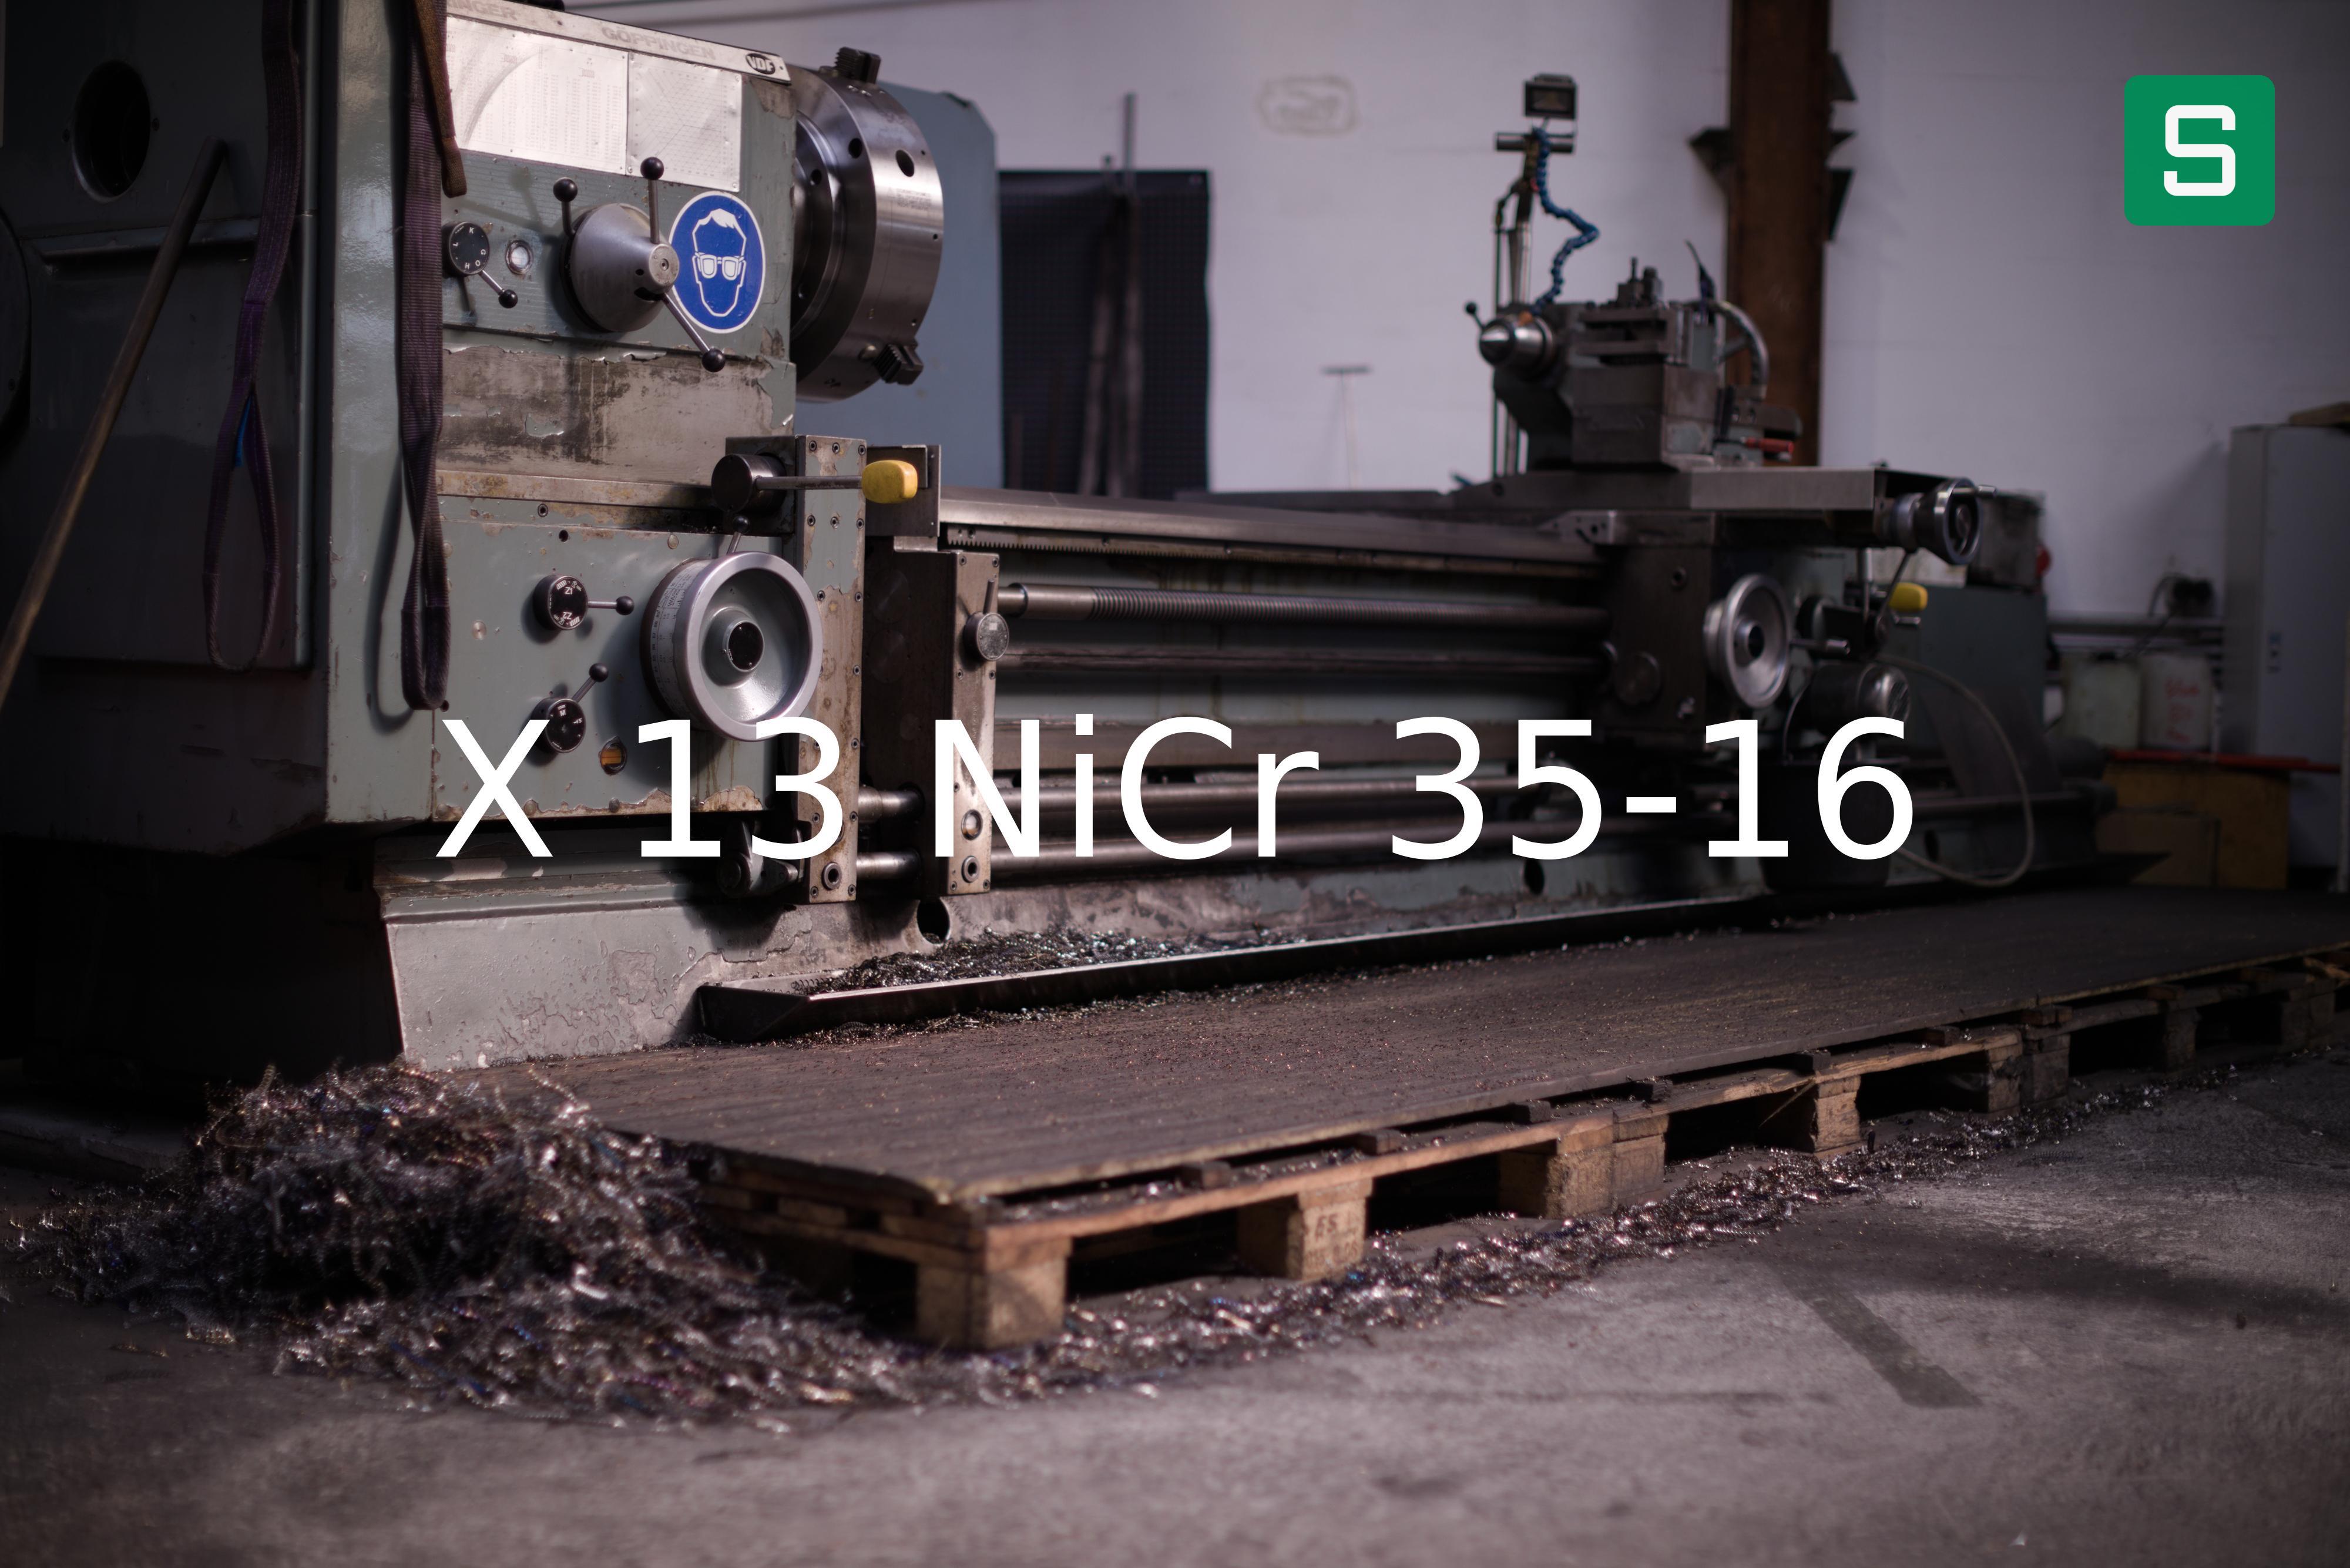 Steel Material: X 13 NiCr 35-16